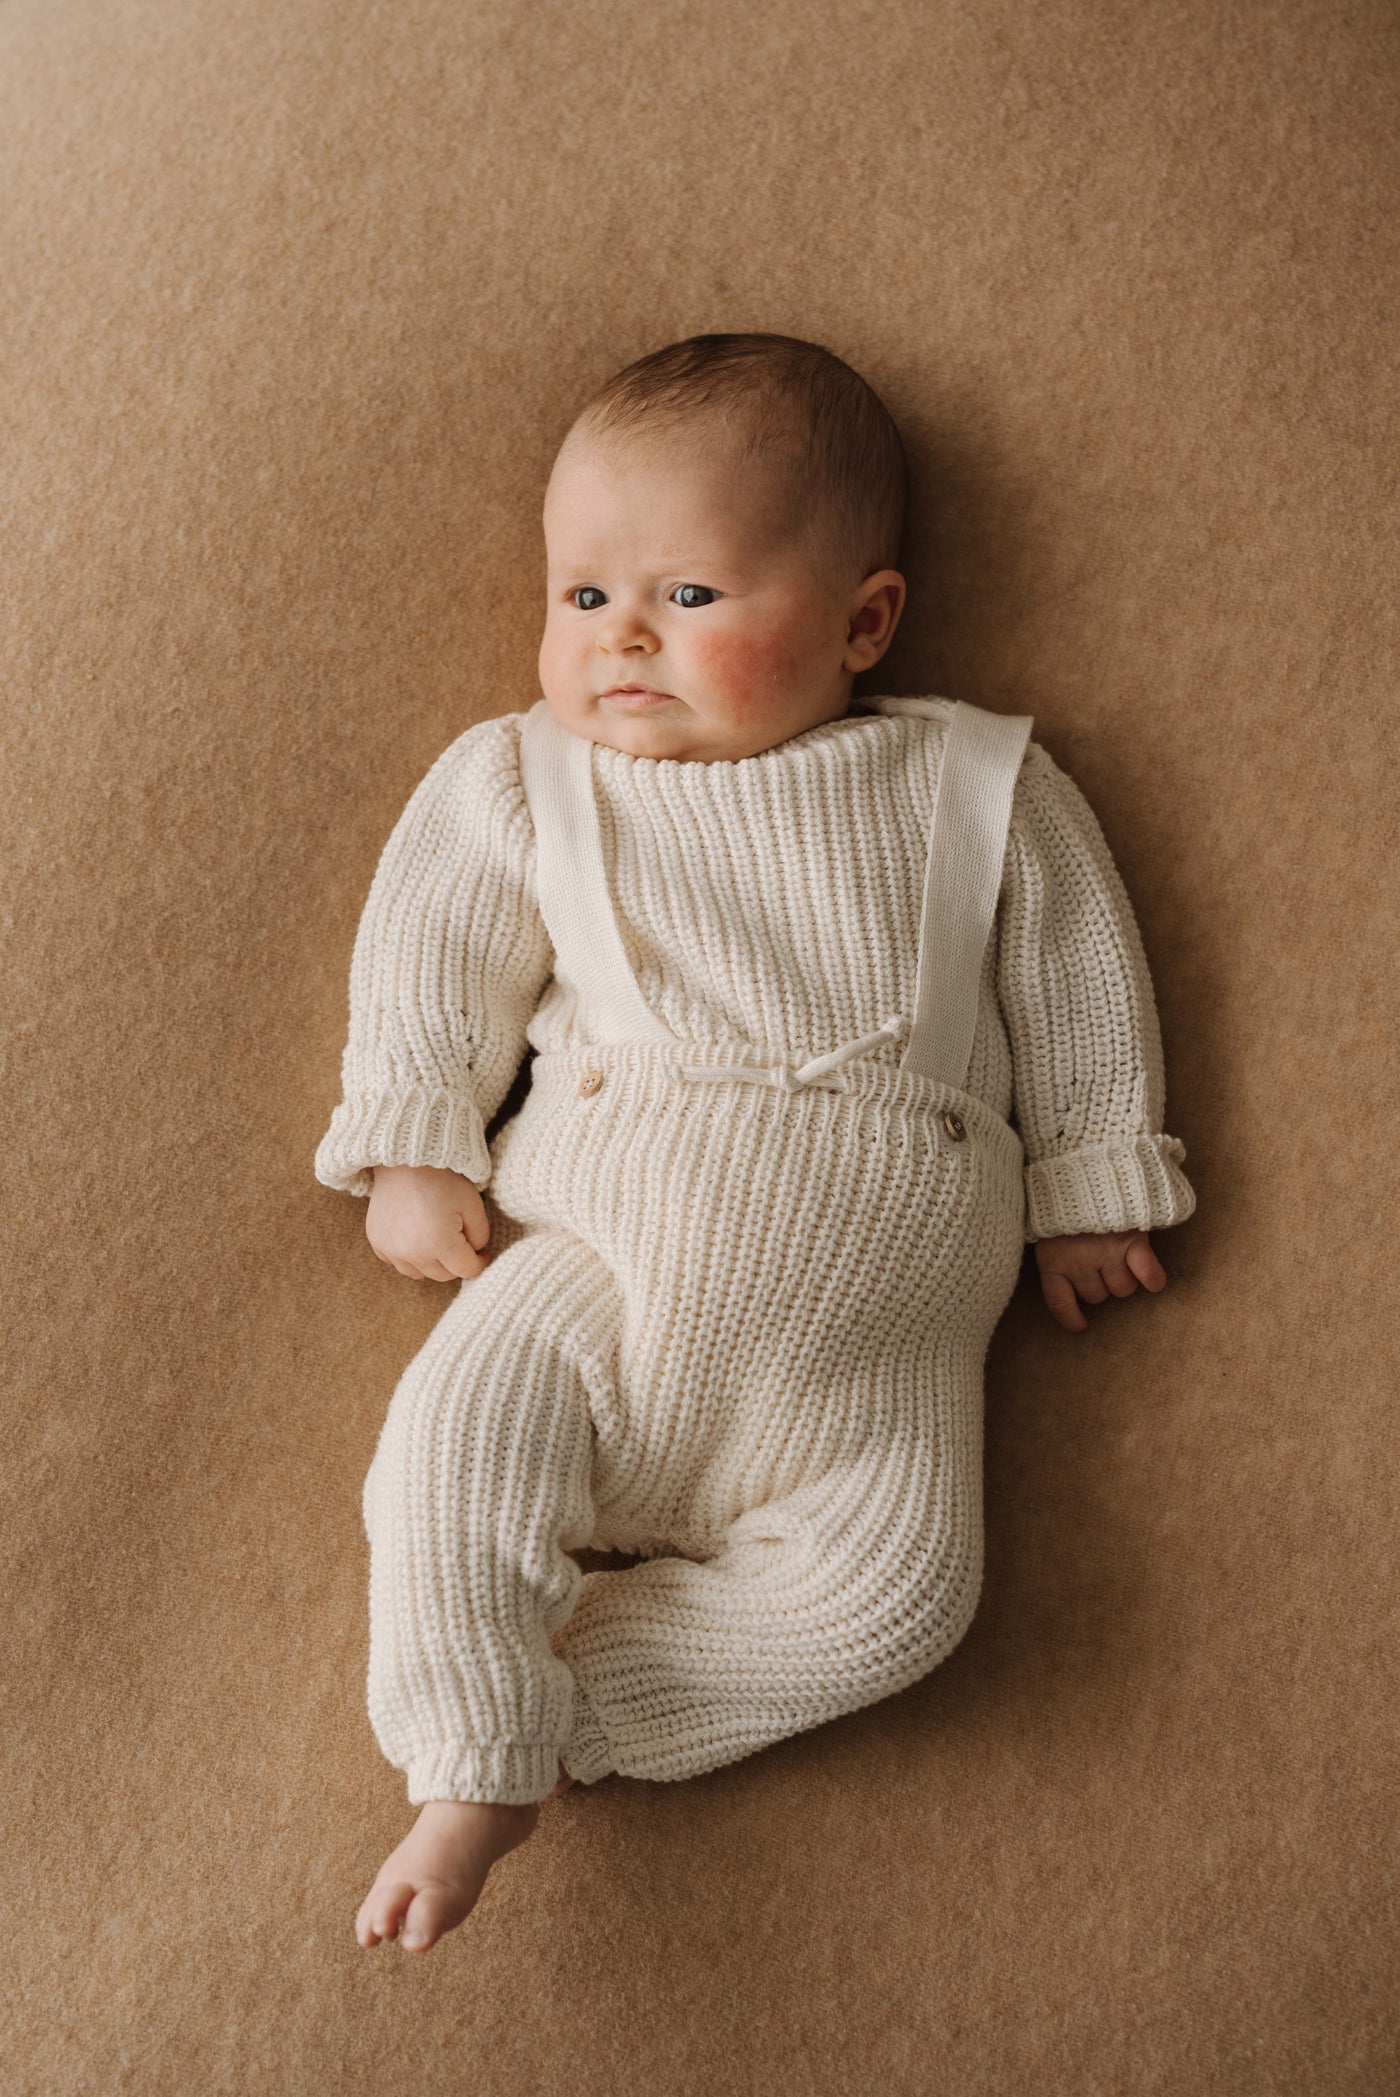 Baby Gift Box - Set Maglione e Pantalone in Cotone Biologico Crema - Baby Clothes - Baby Rainbow Shop - P.IVA 04847500230